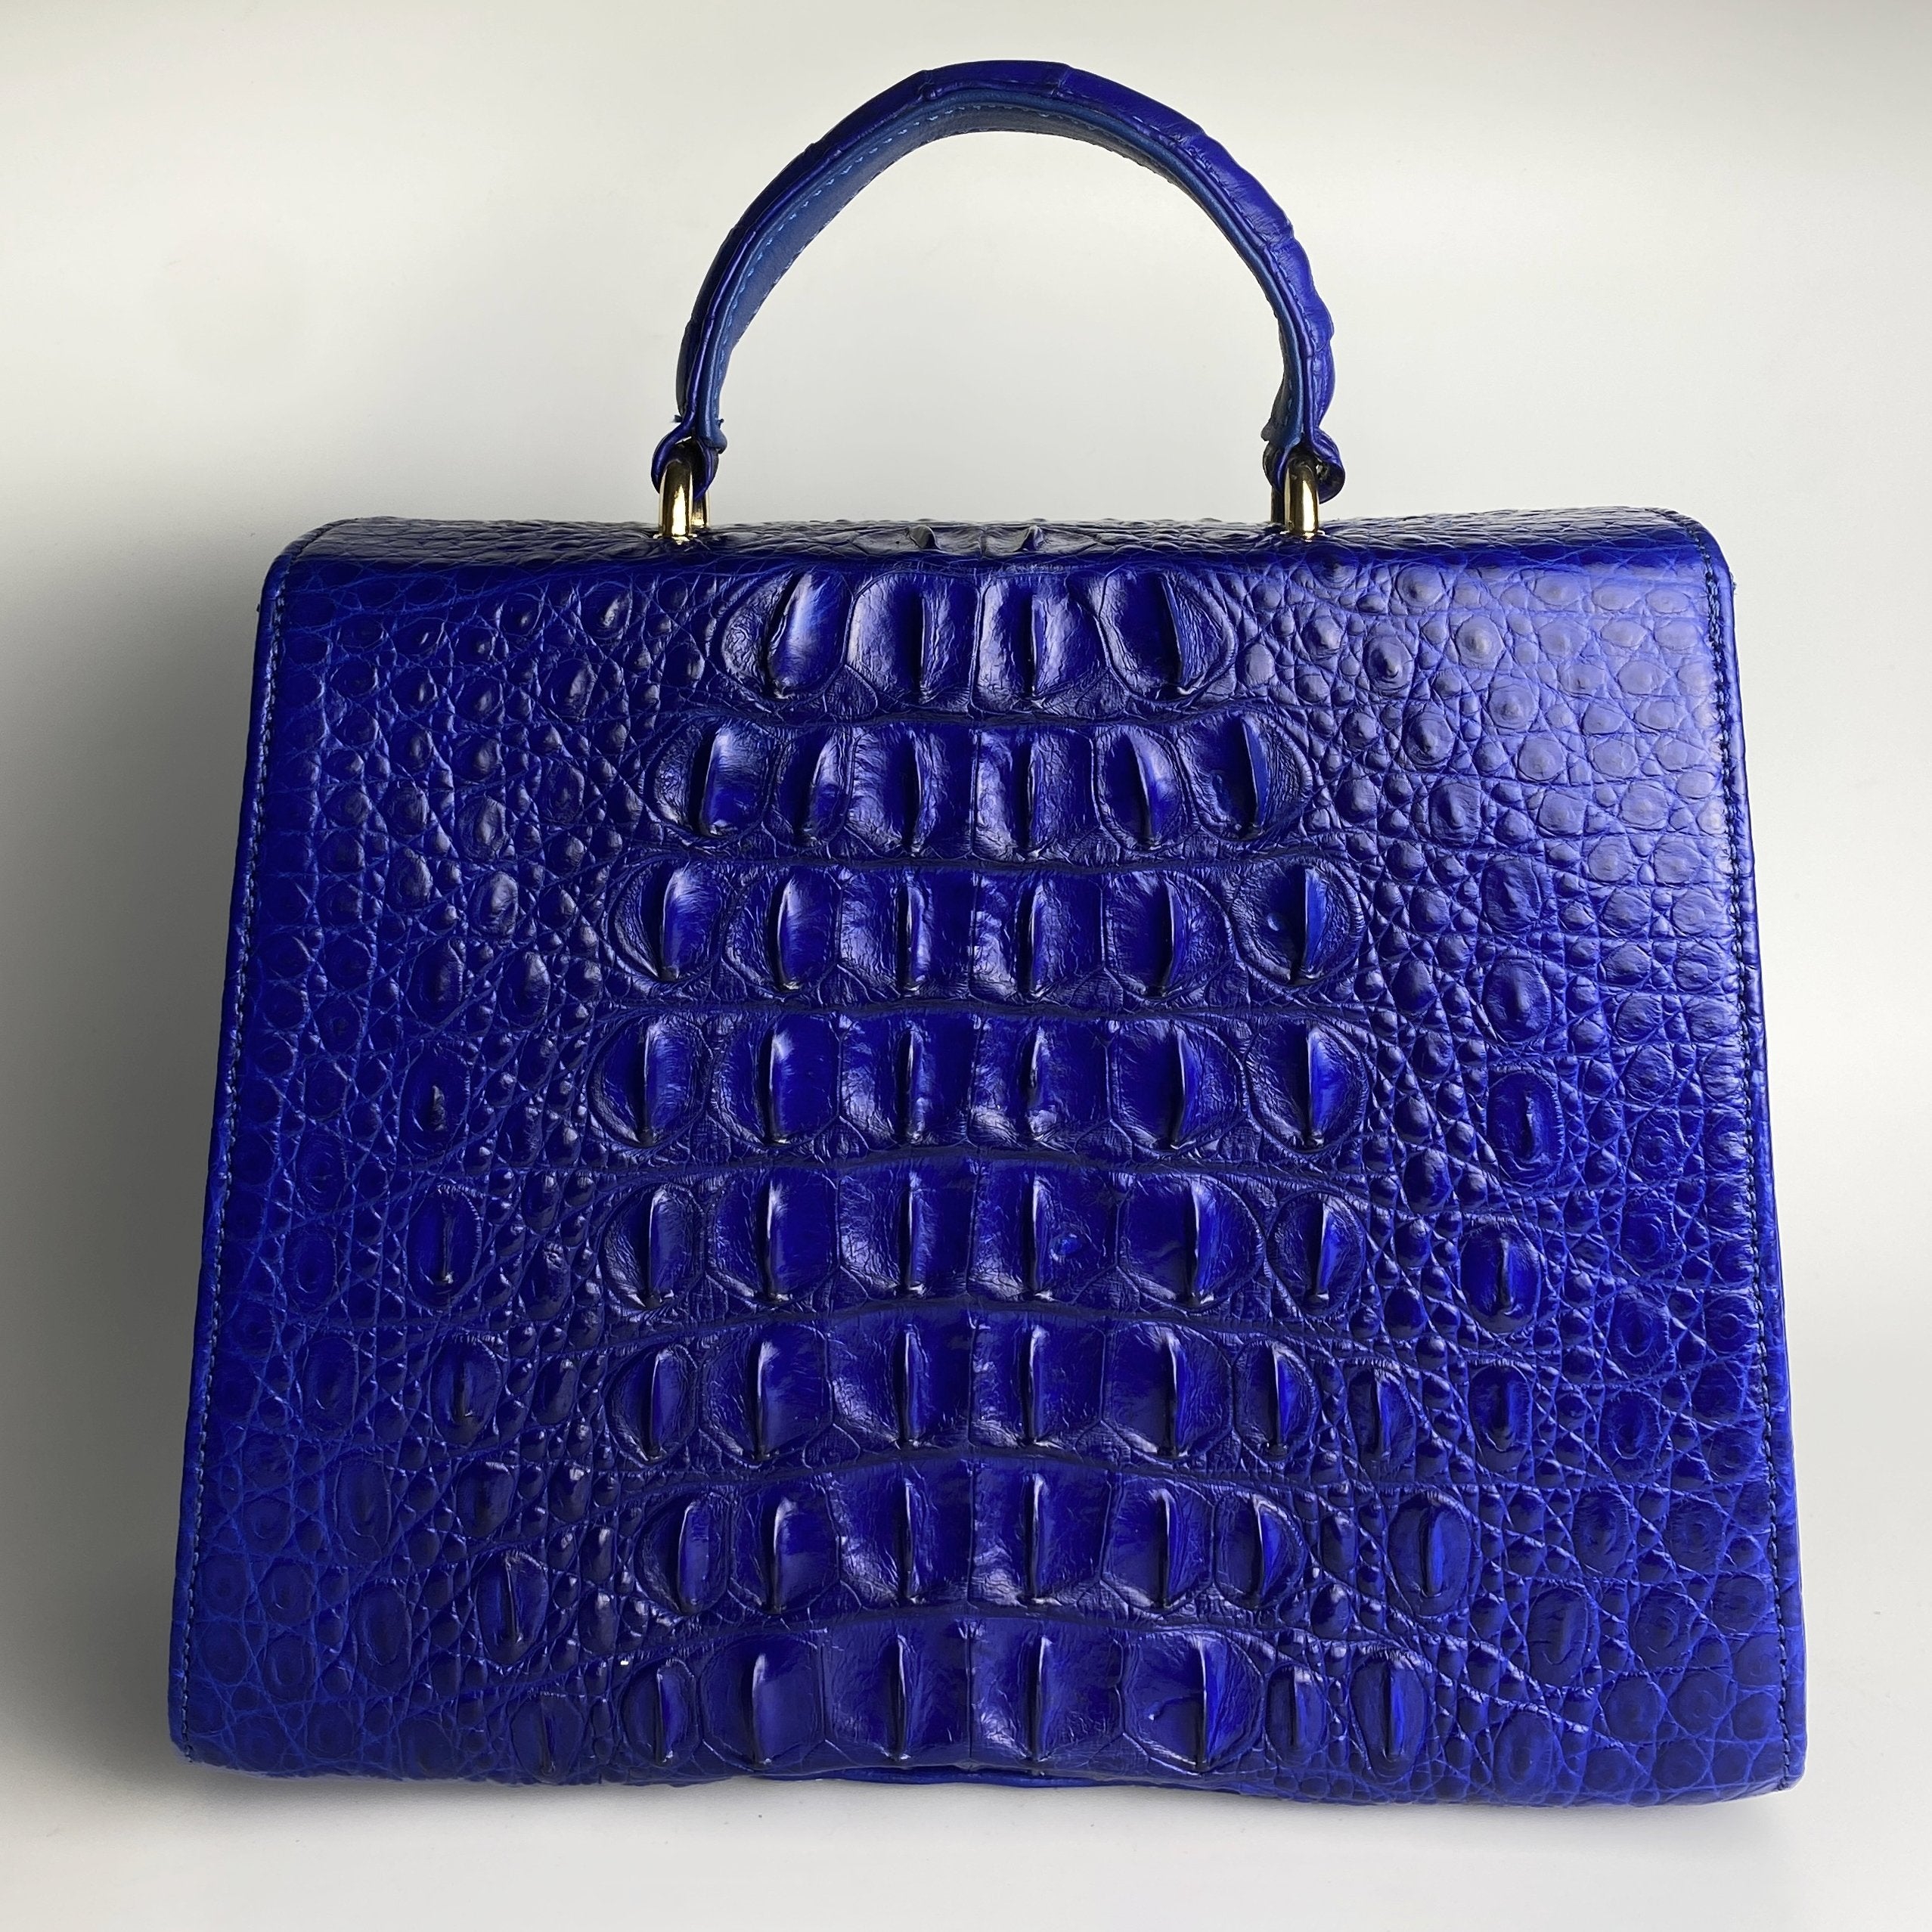 1930s true vintage crocodile handbag leather bag ~ Art Deco chic | eBay